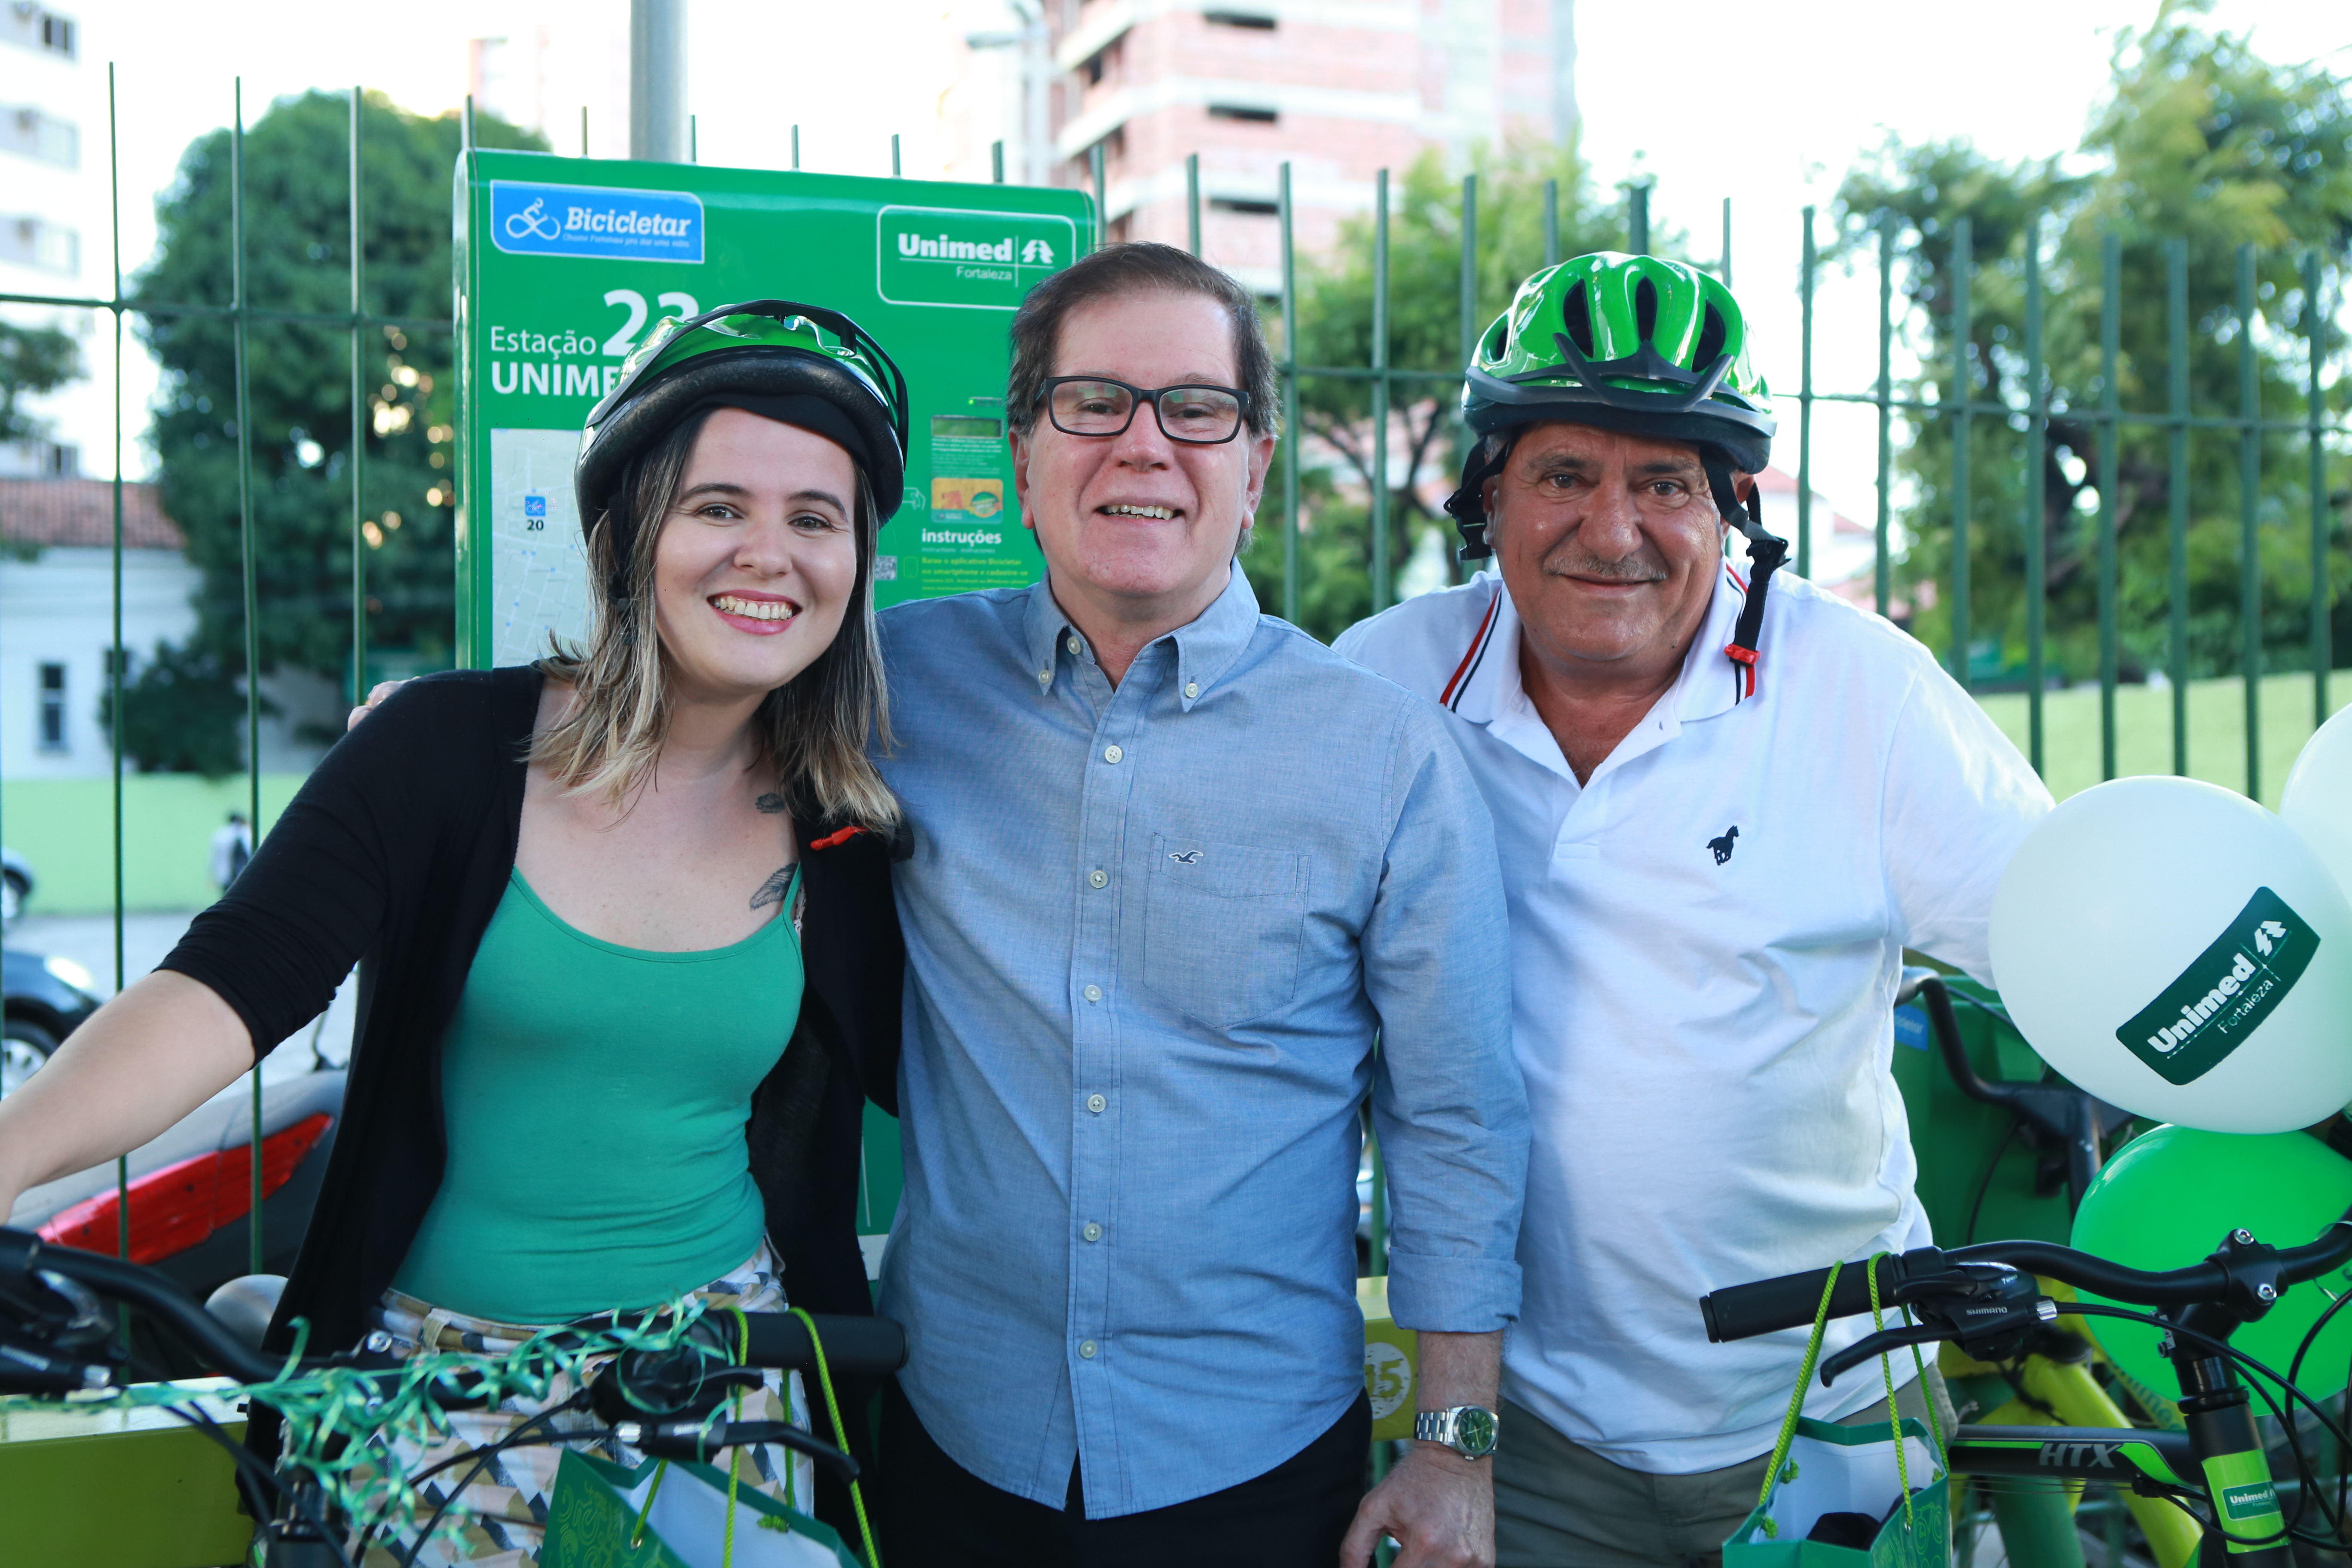 Entrega das bicicletas. Luisa Lemos, Dr. Joo Borges e Vagner Freitas